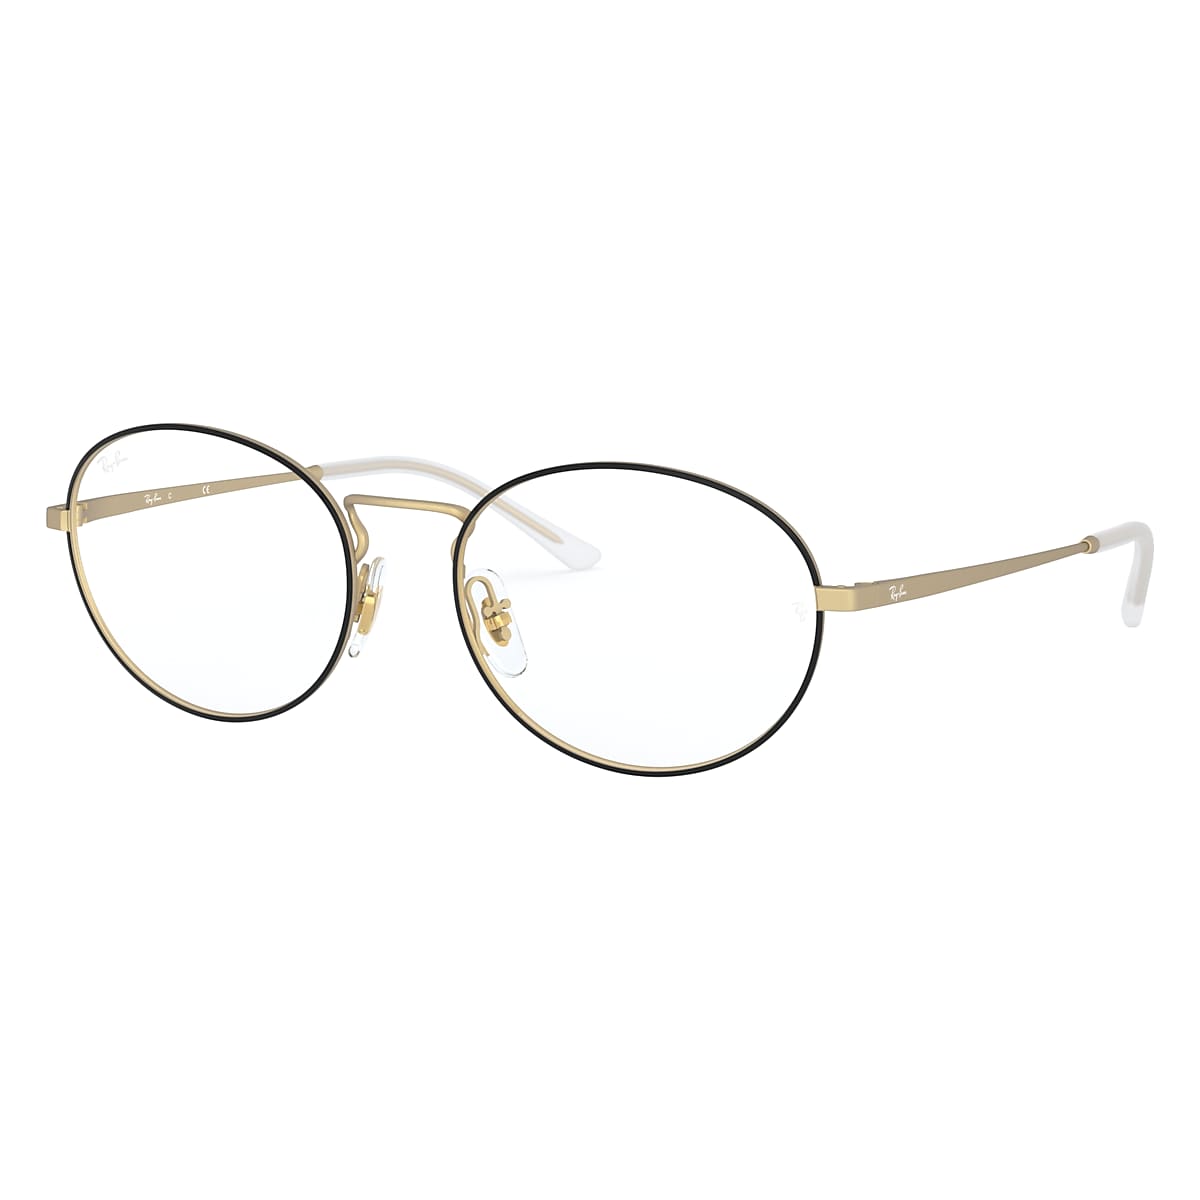 Rb6439 Eyeglasses with Black Frame | Ray-Ban®